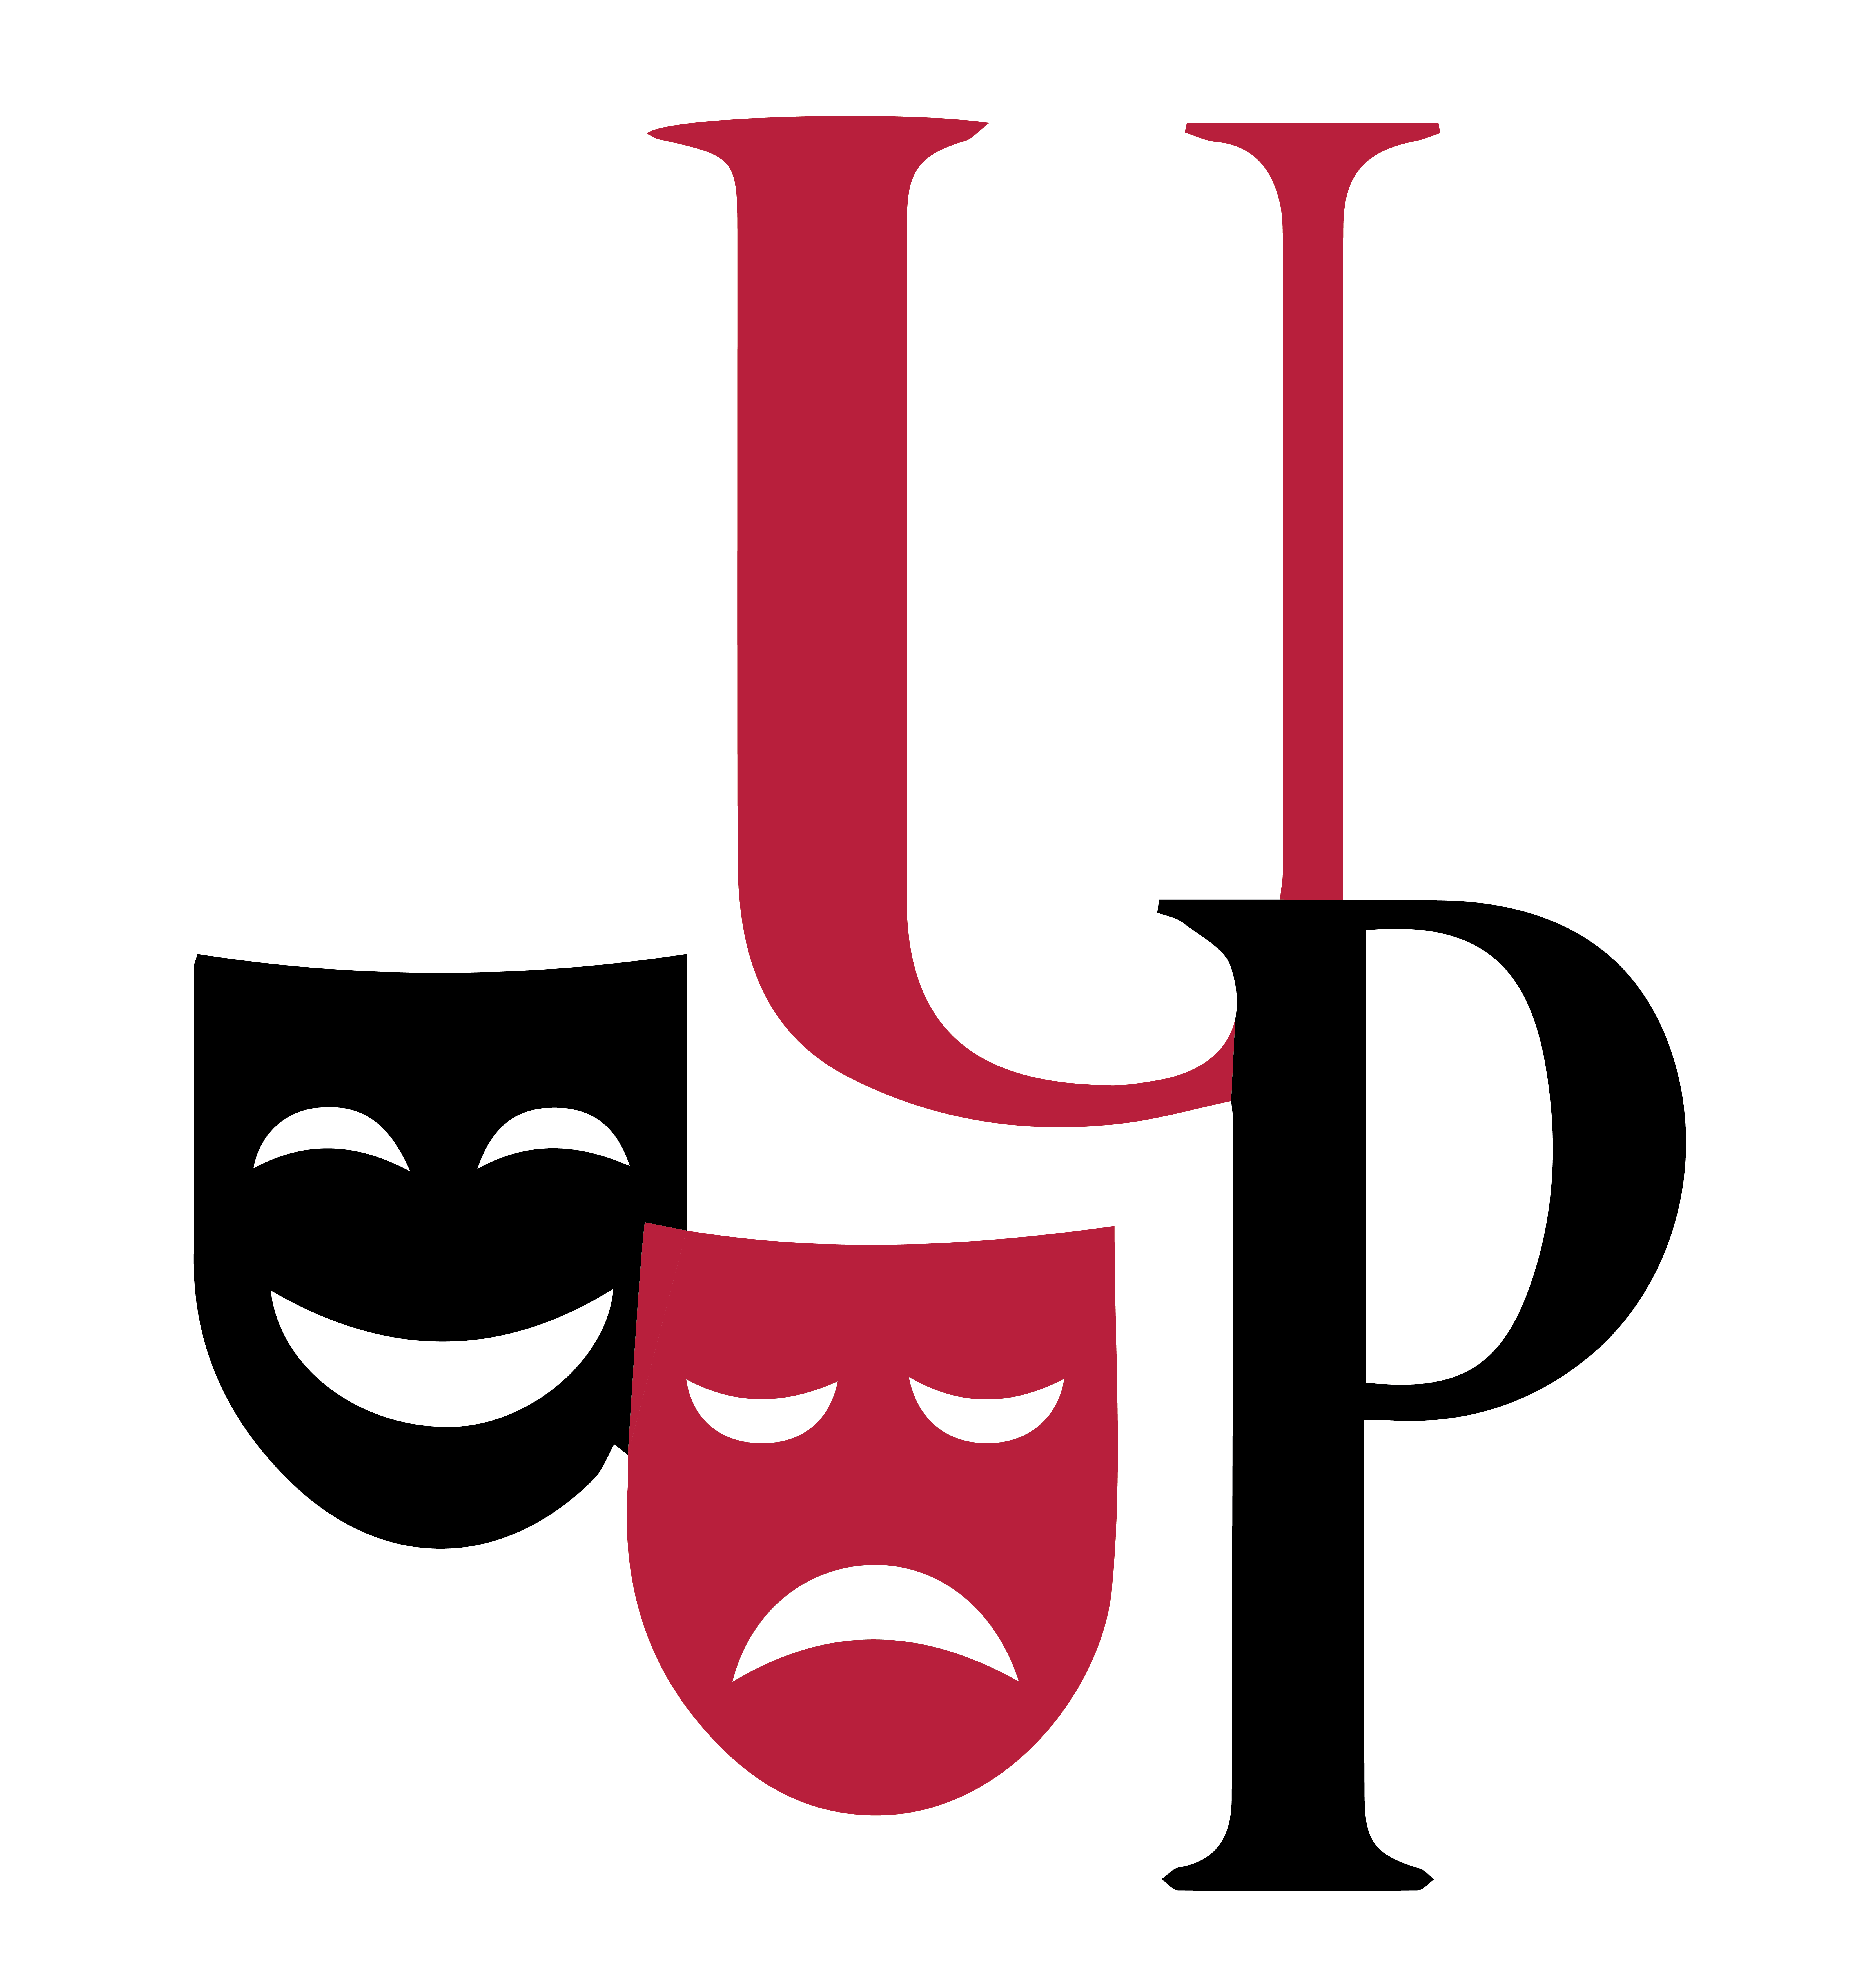 The Uwharrie Players, Inc. logo